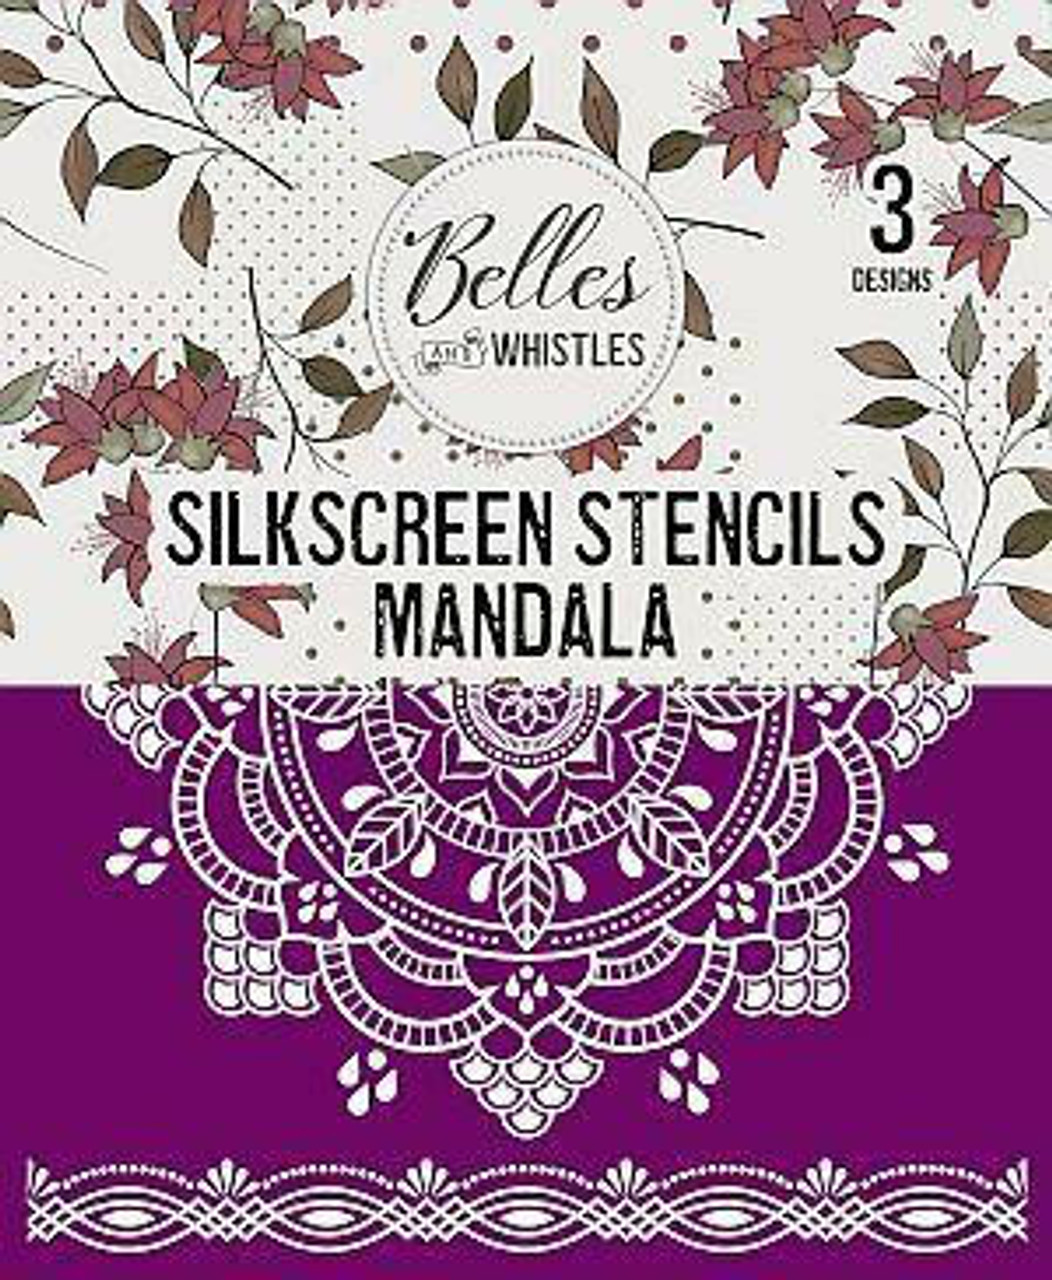 Mandala - Silkscreen Stencil - Dixie Belle Paint Company